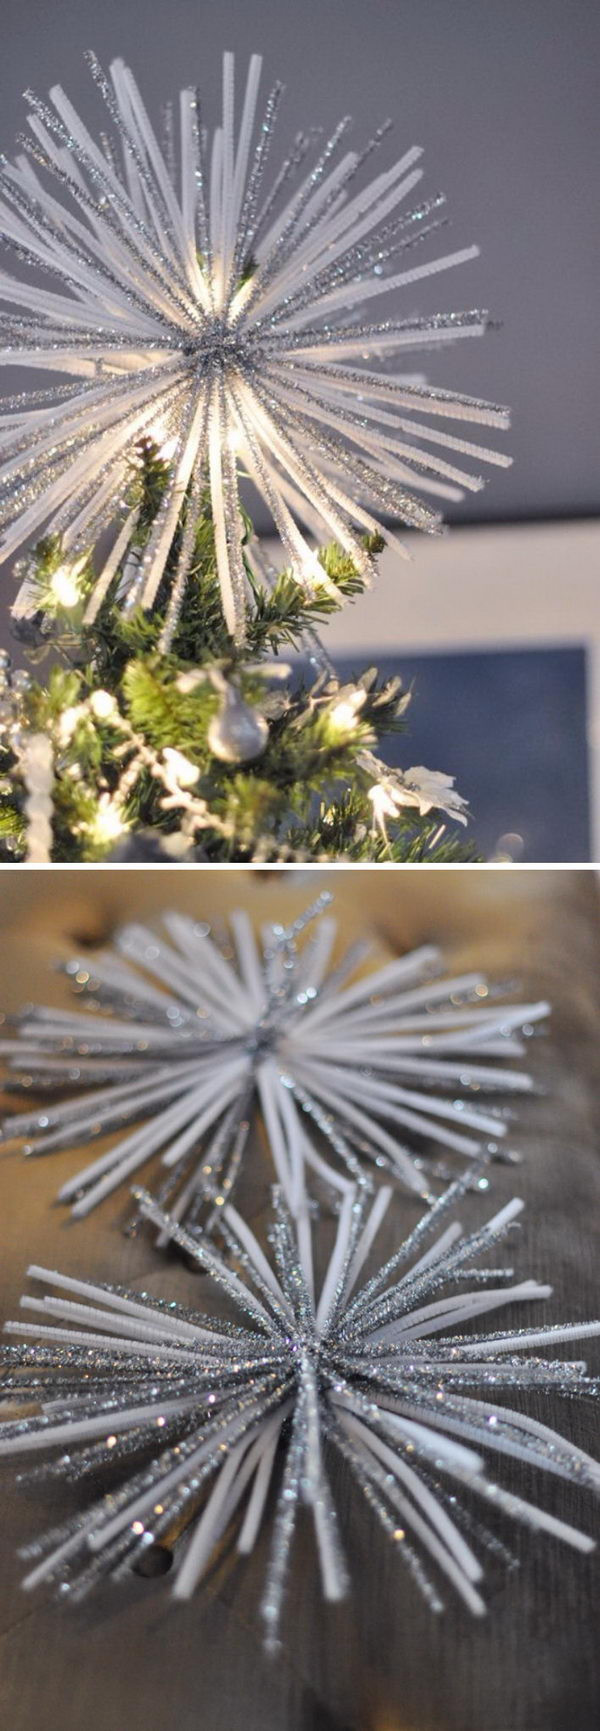 Christmas Tree Topper DIY
 Awesome DIY Christmas Tree Topper Ideas & Tutorials Hative